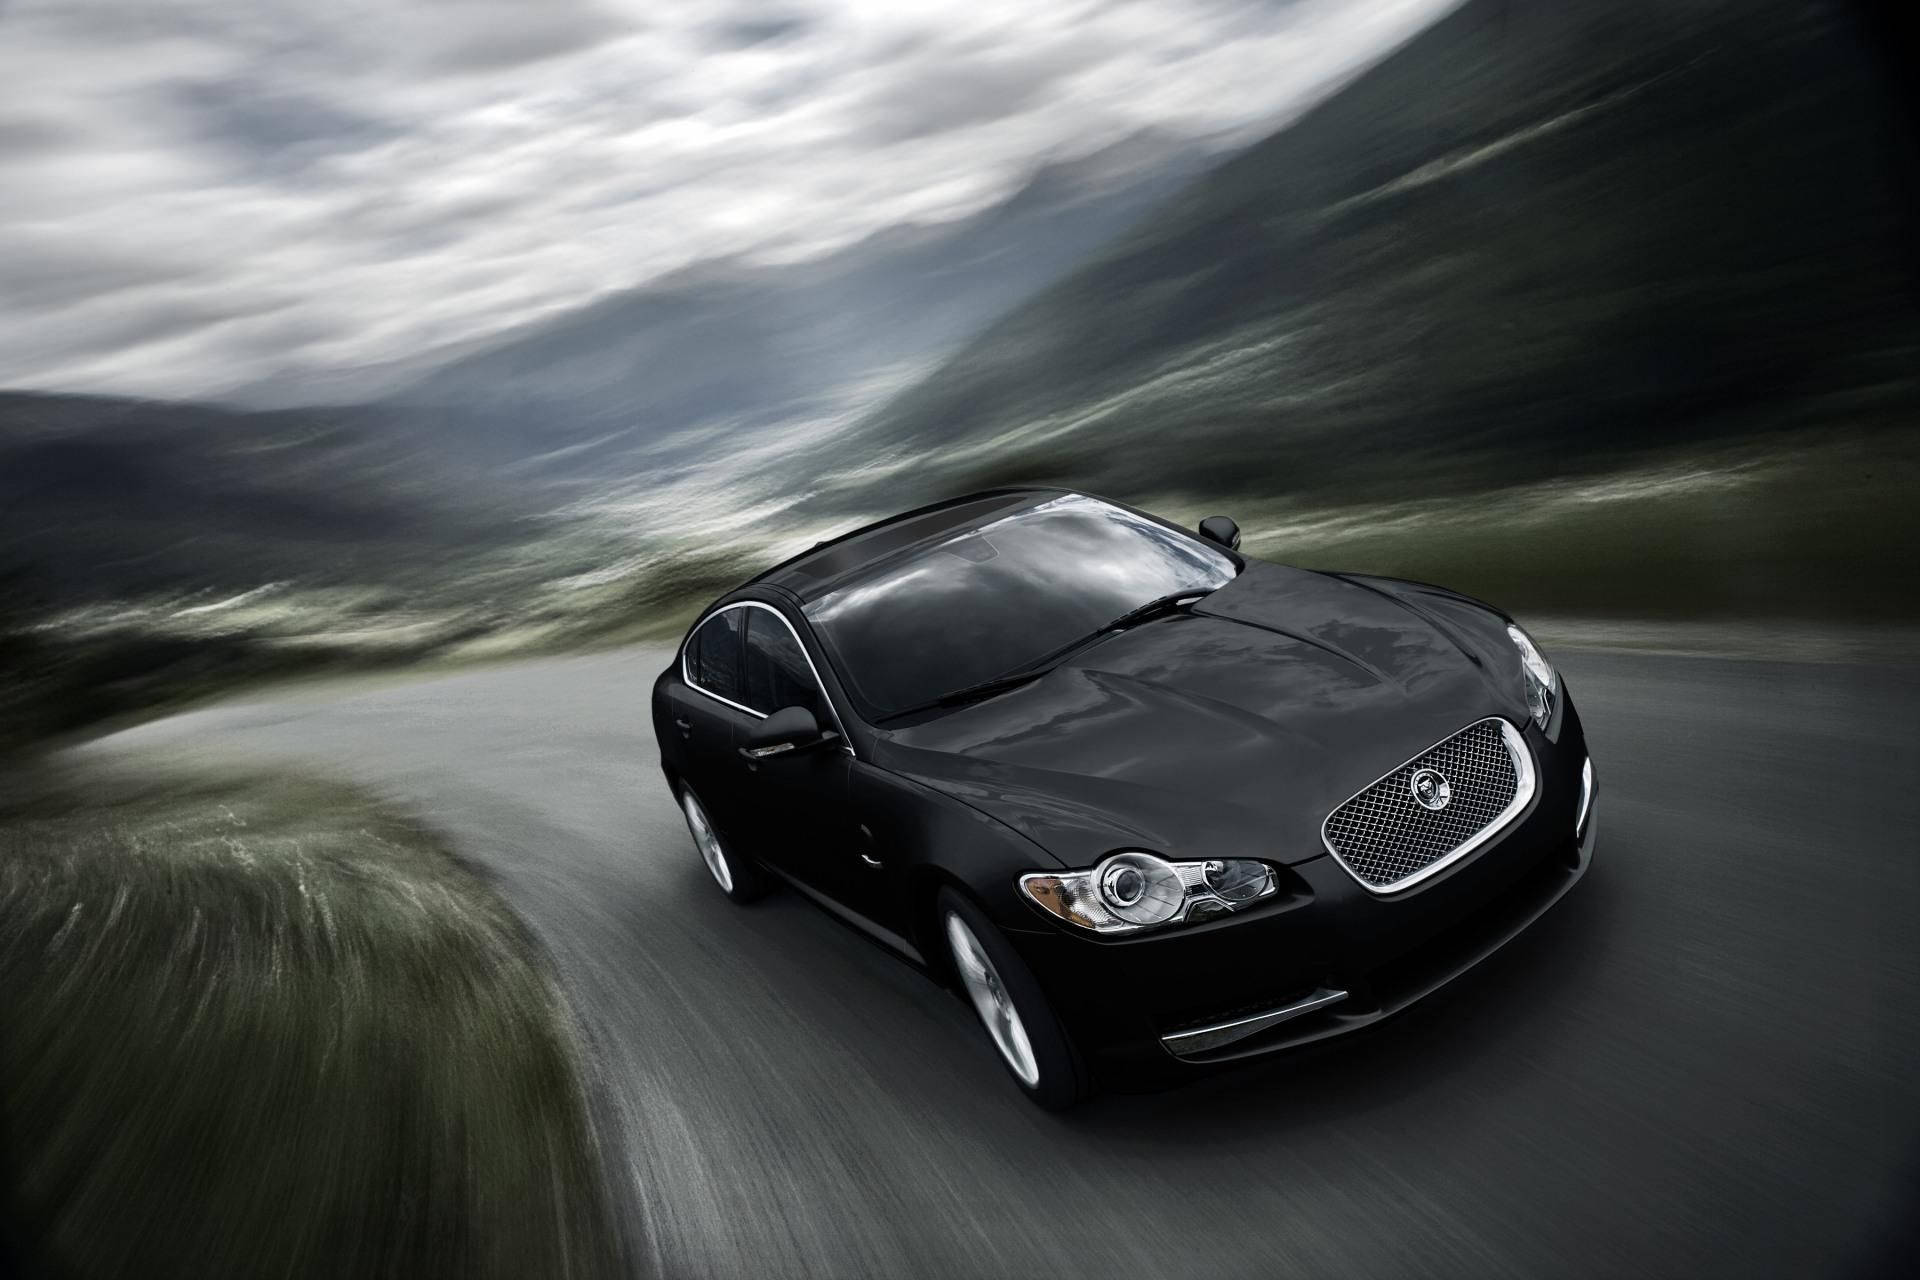 Speed and style combine in this sleek black Jaguar car. Wallpaper